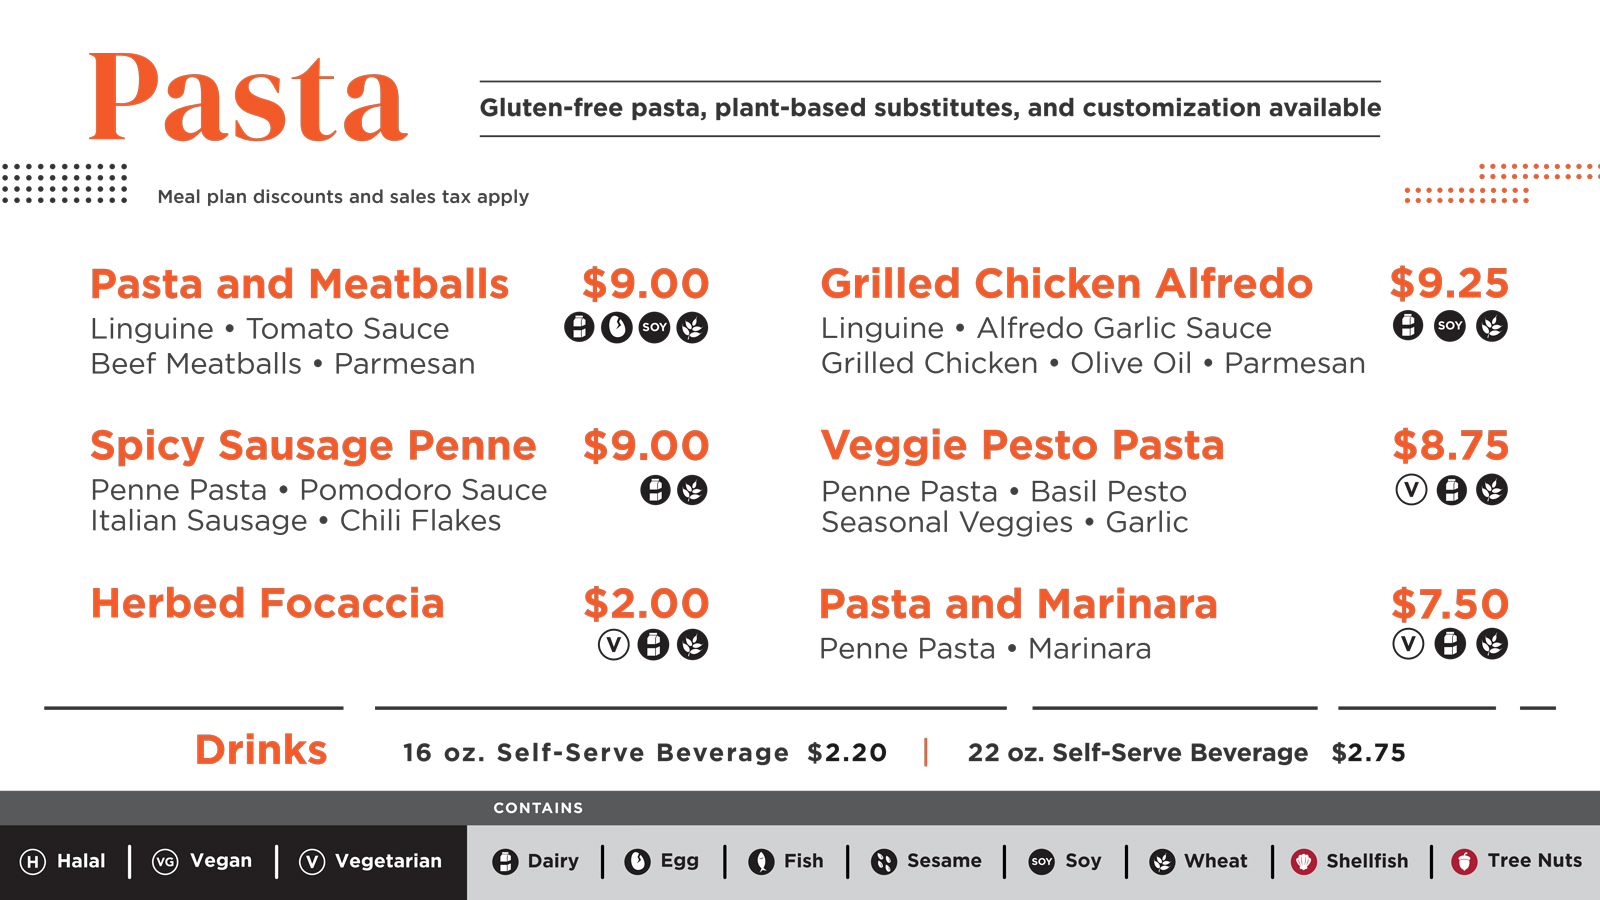 The pasta menu board